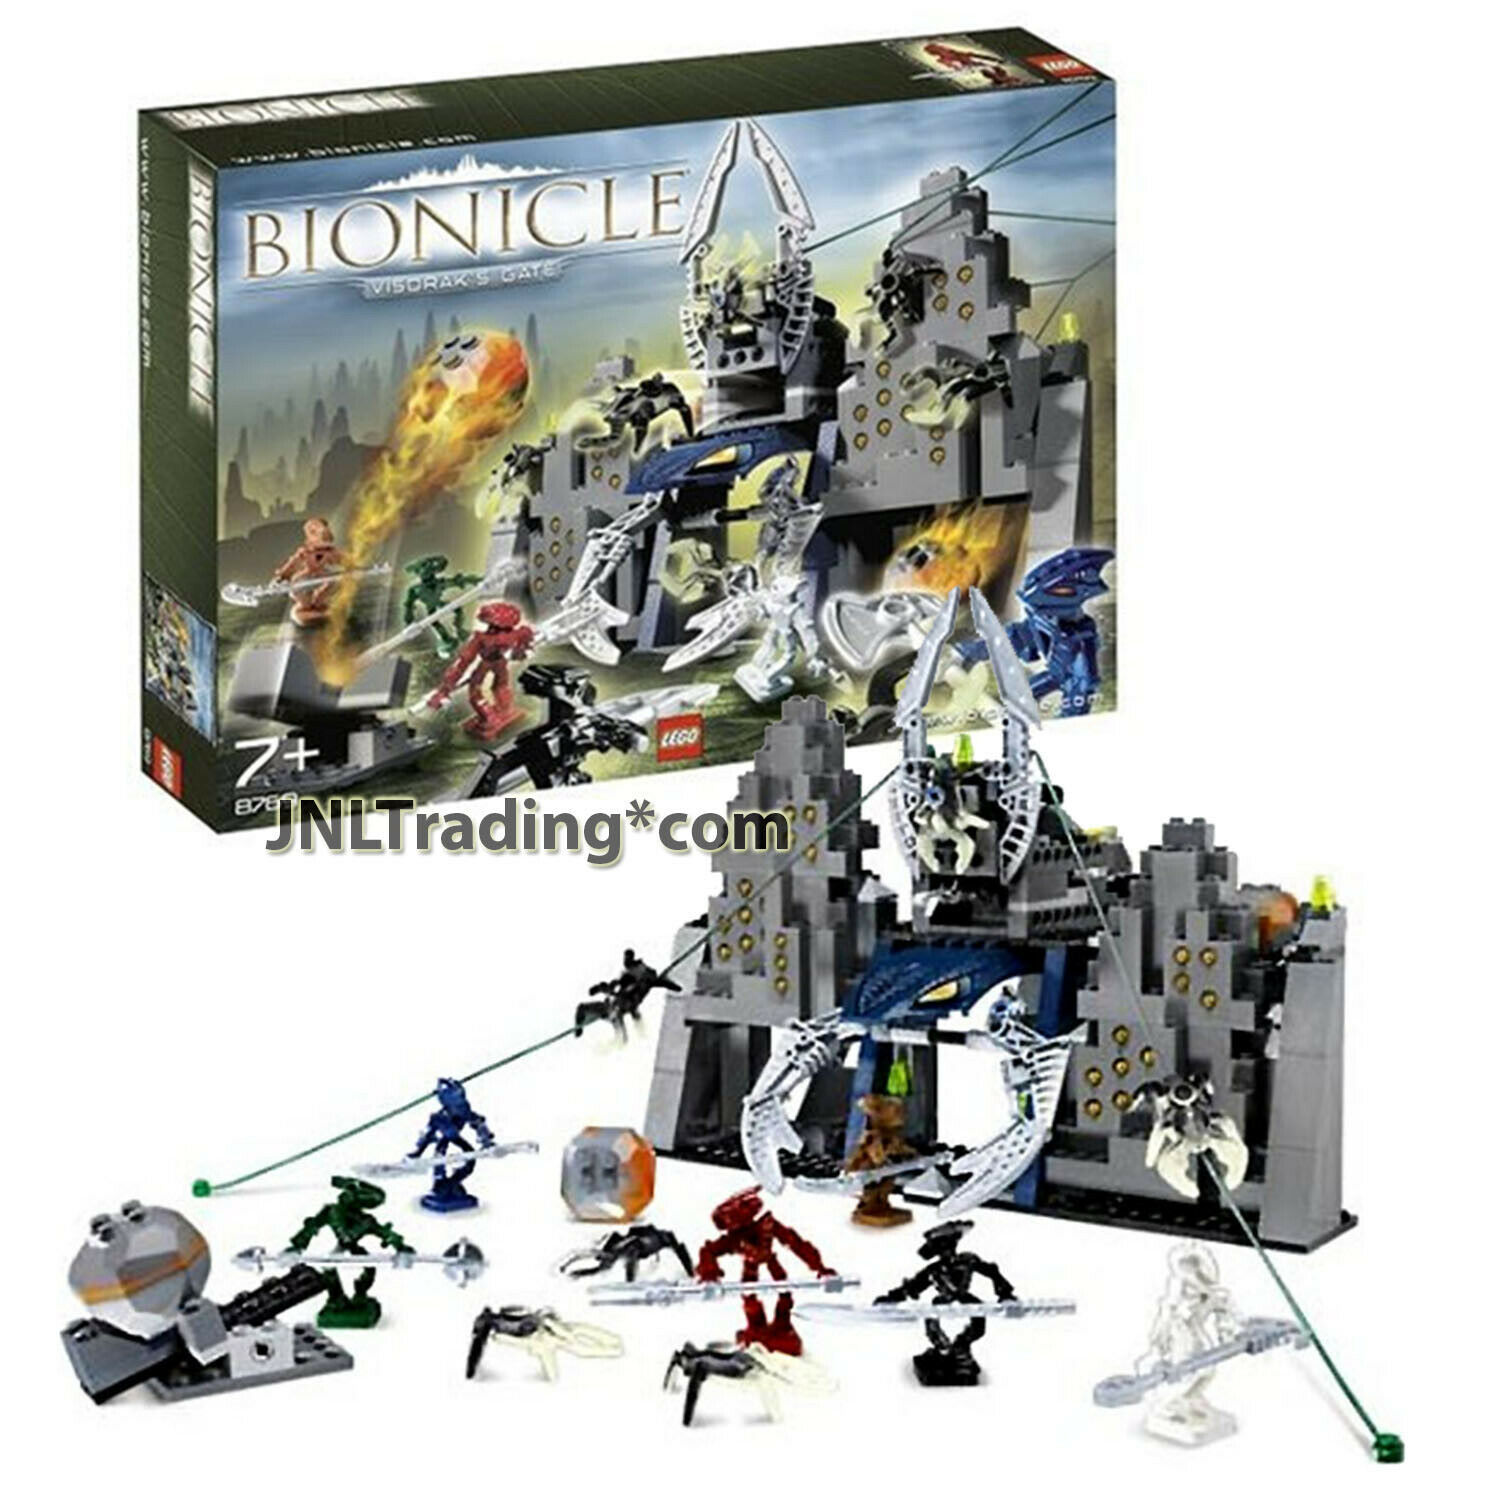 Year 2005 Lego Bionicle 8769 VISORAK'S GATE w/ Toa Hordika and Visorak (325 Pcs) - $139.99